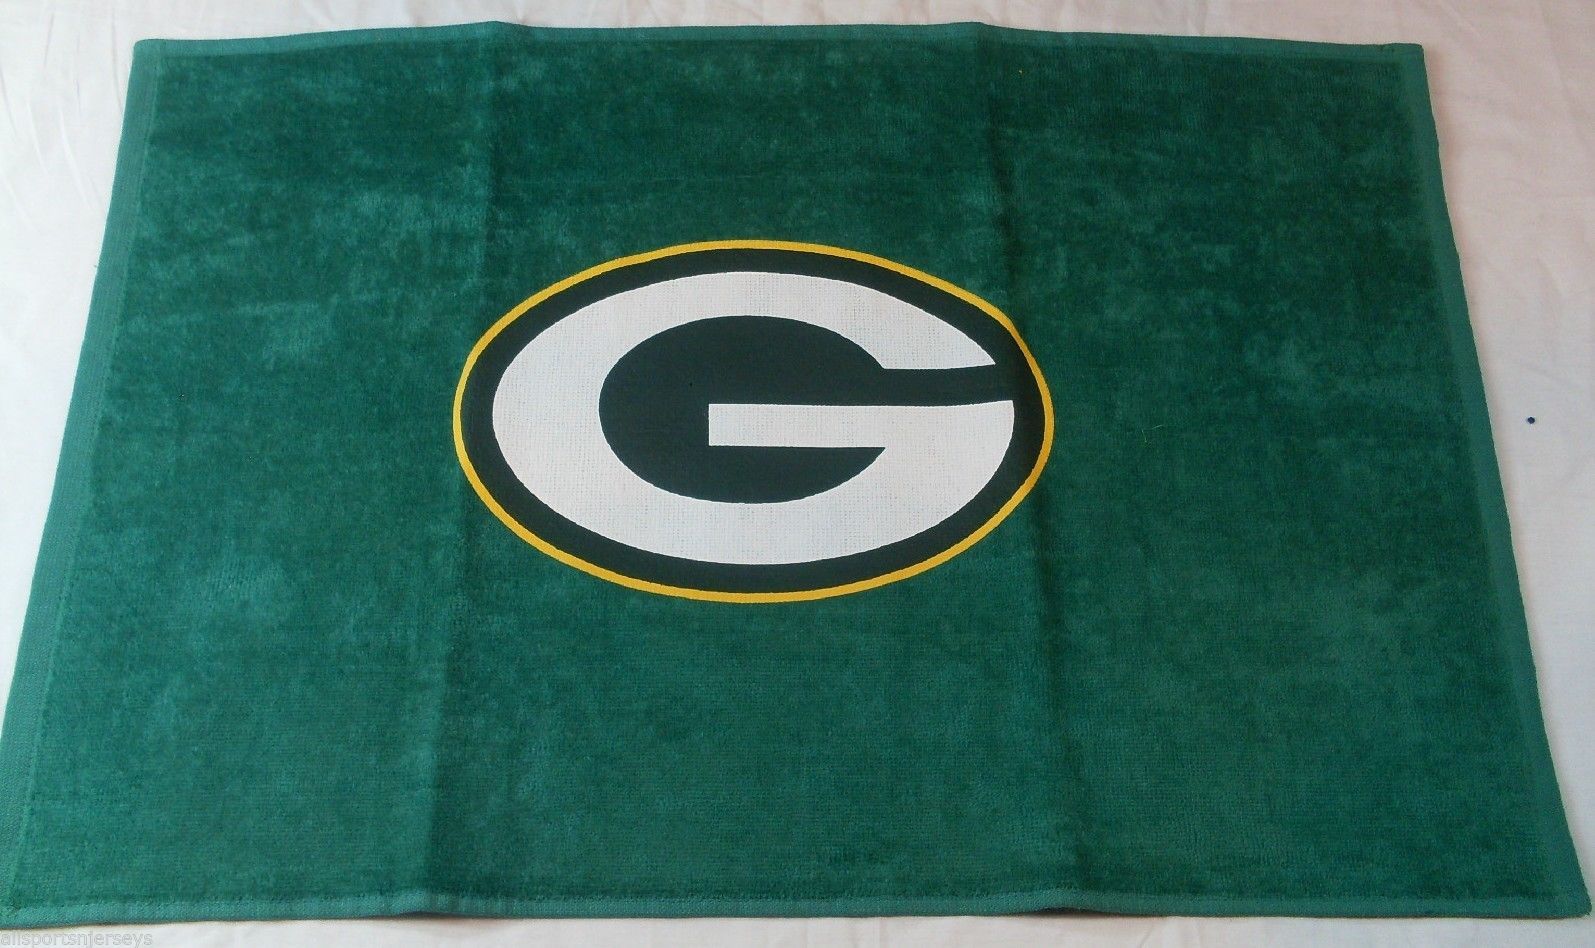 NFL Green Bay Packers Sports Fan Towel Green 15" by 25" by WinCraft - $17.99